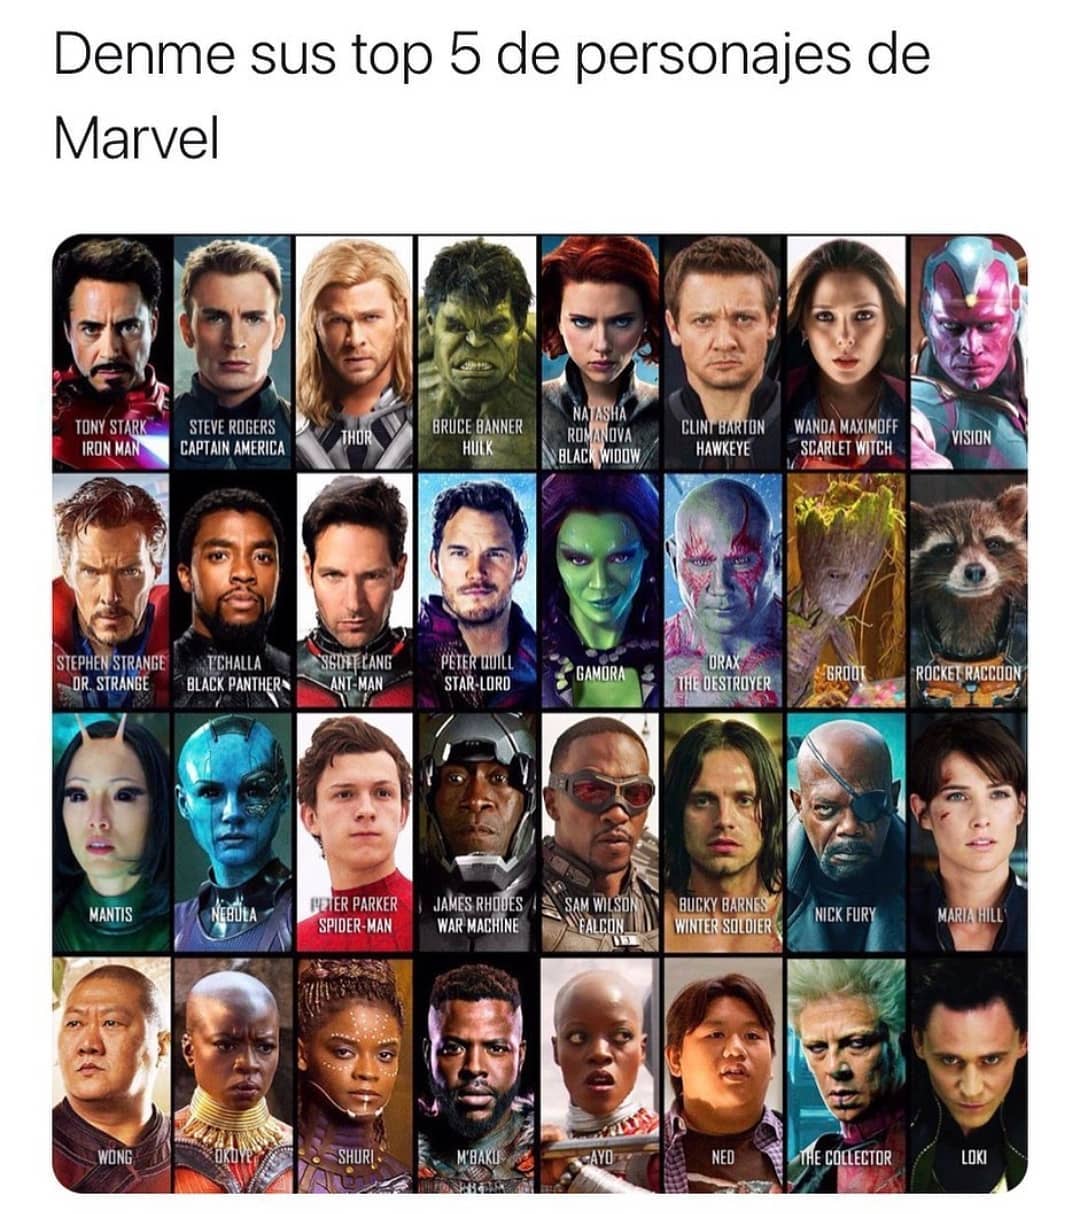 Denme sus top 5 de personajes de Marvel: